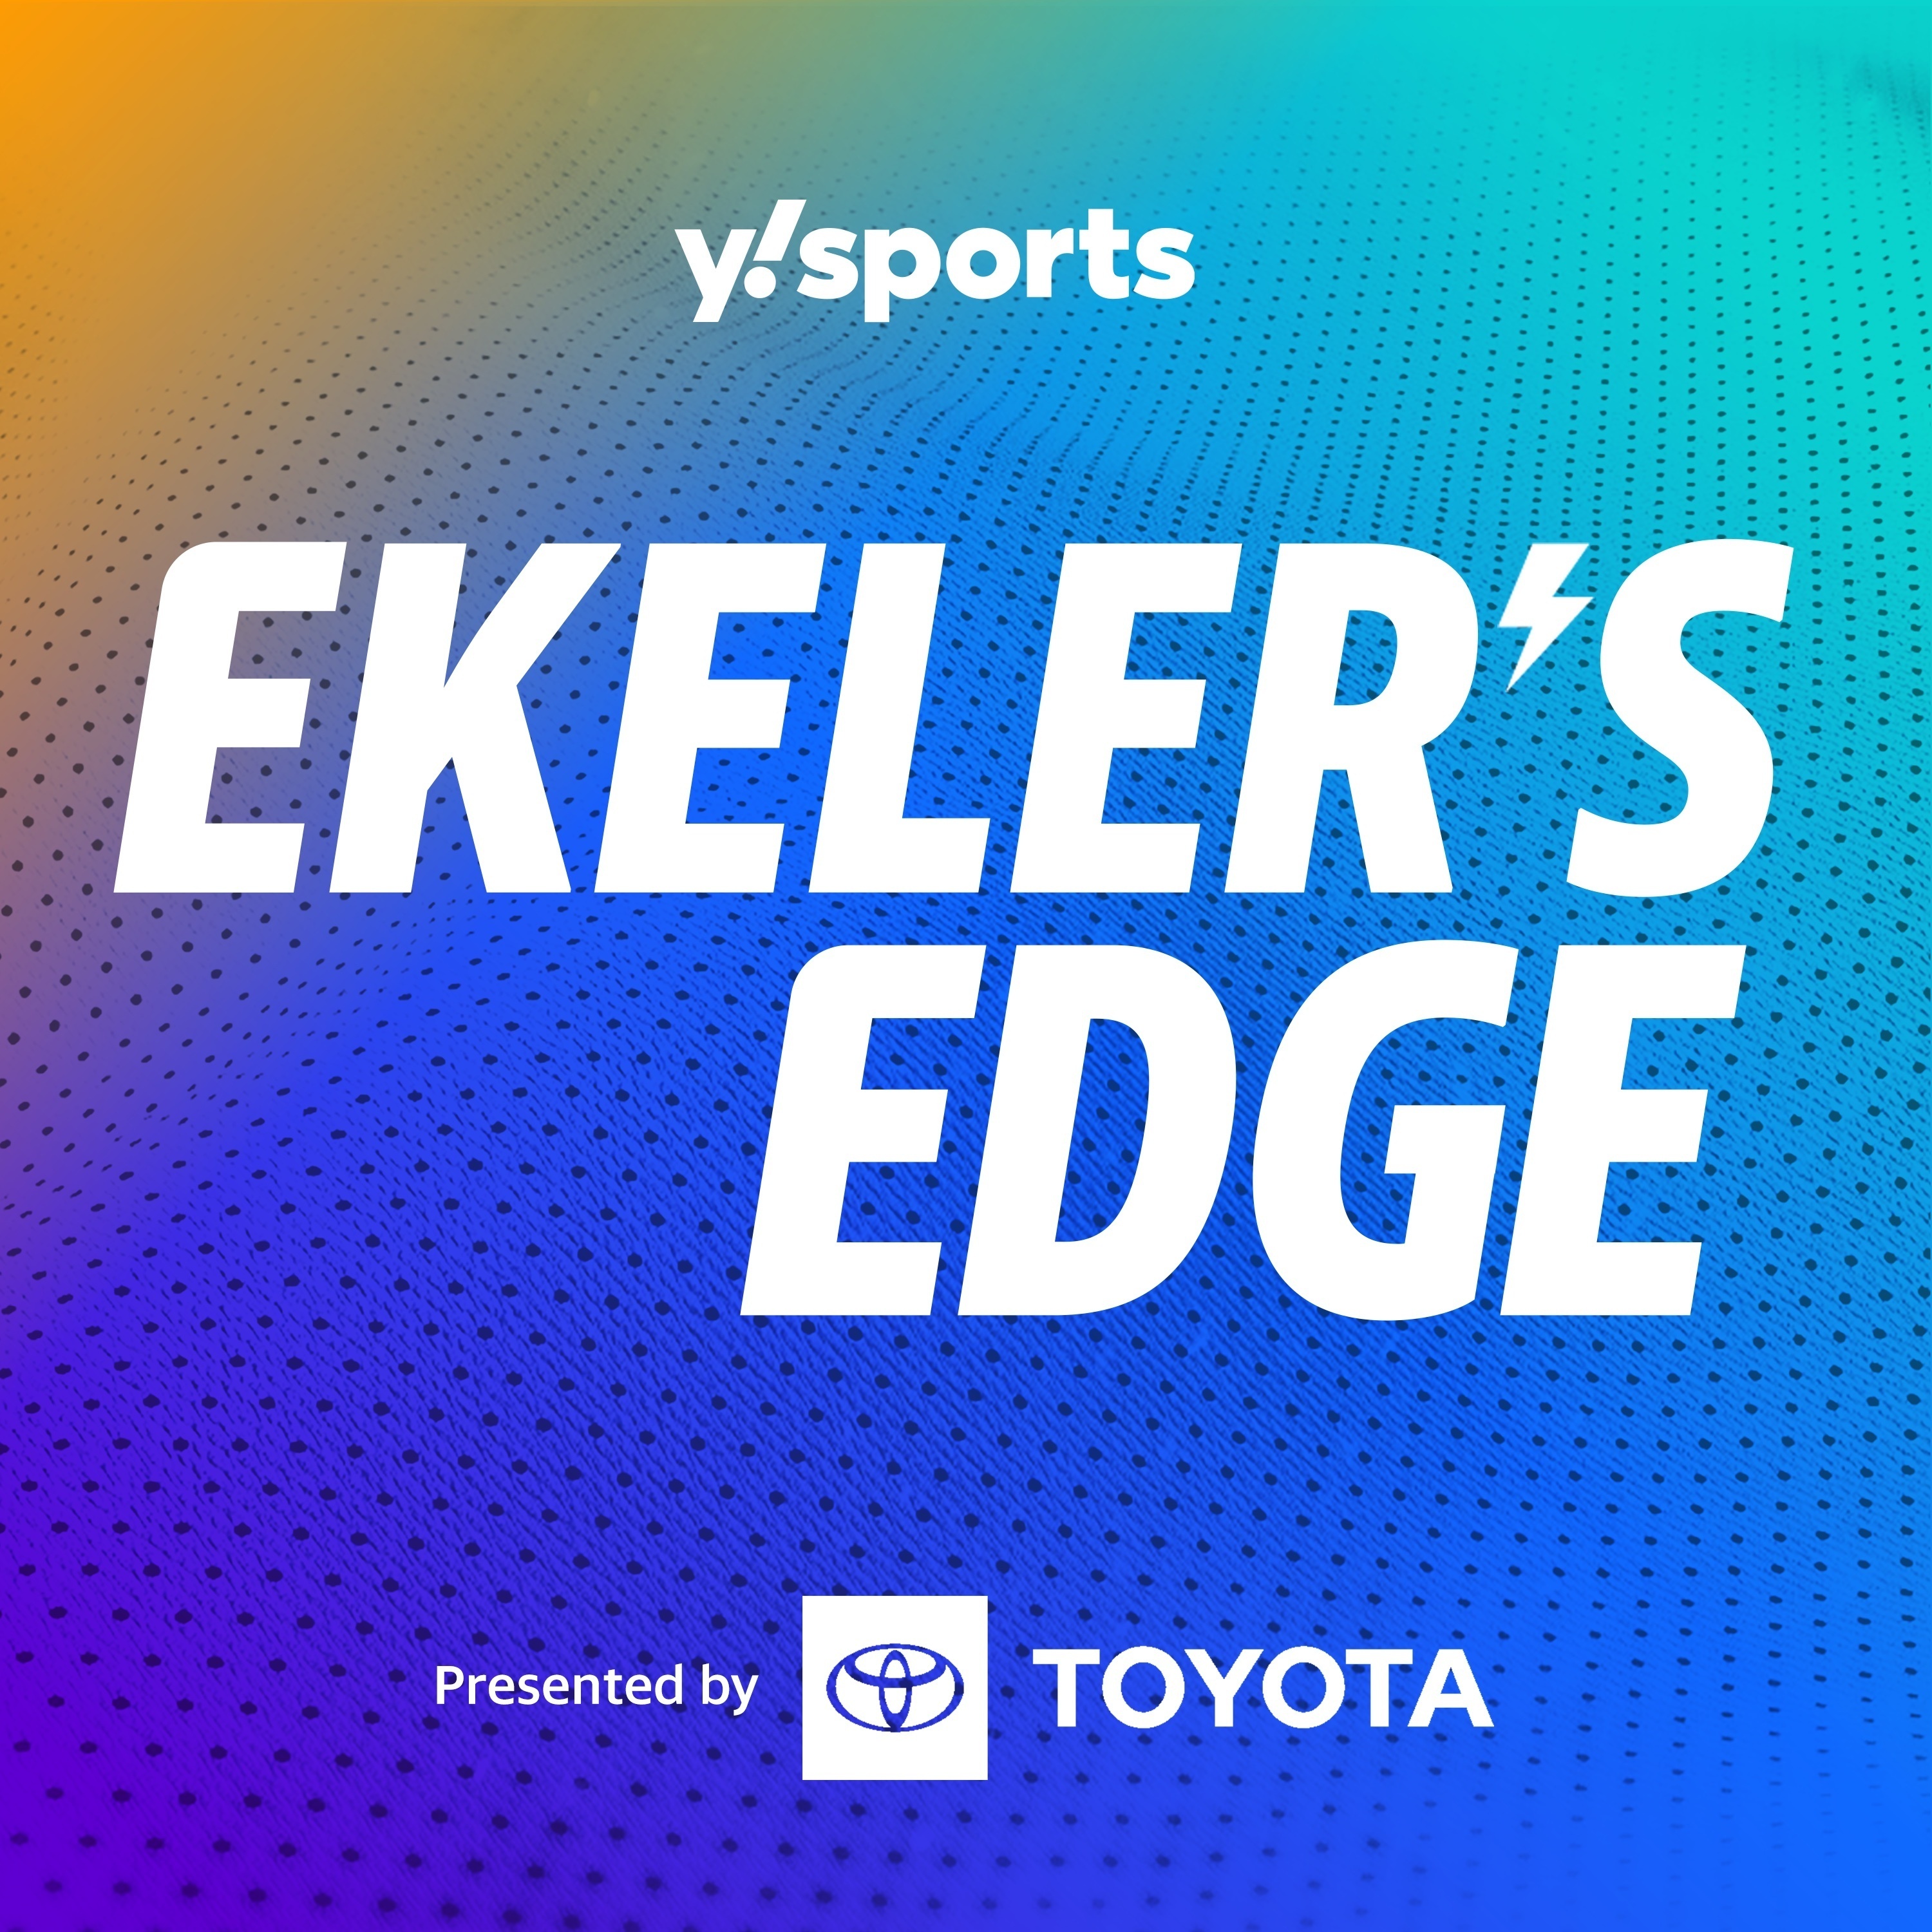 Ekeler's Edge: Can non-QB win MVP? + Ranking top 4 RBs for fantasy playoffs